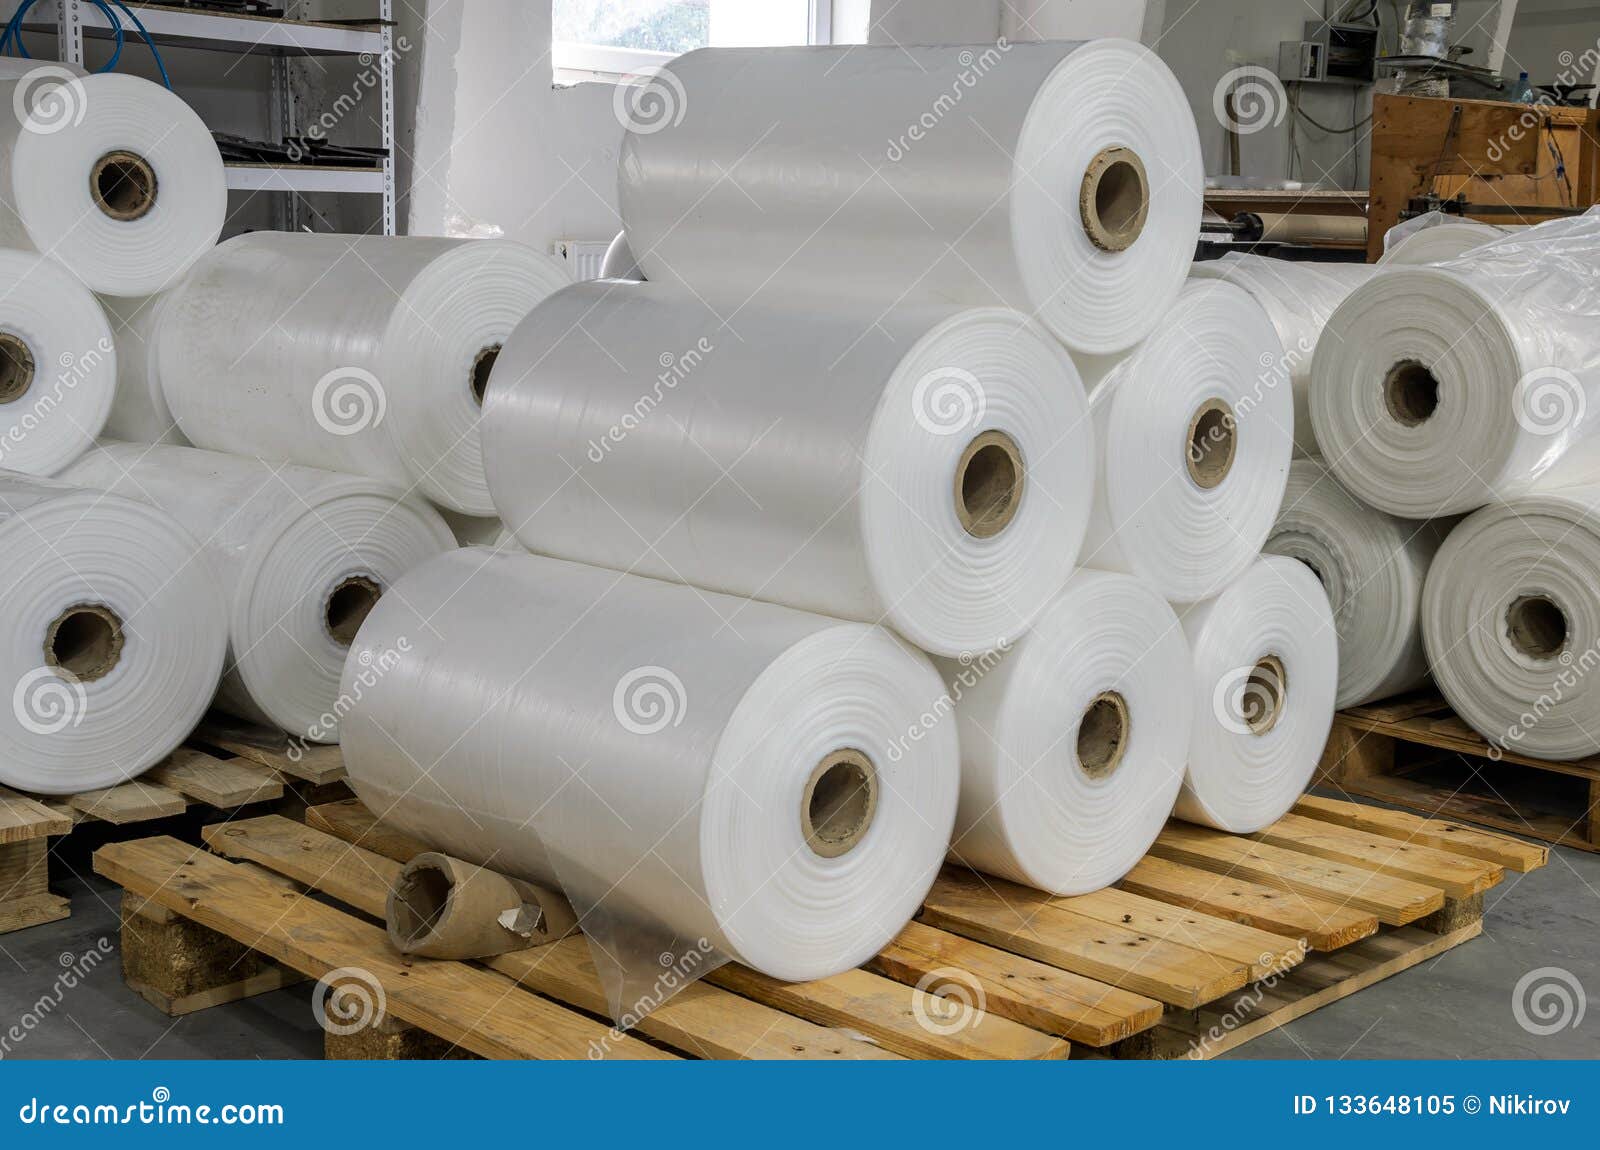 warehouse with rolls of polyethylene